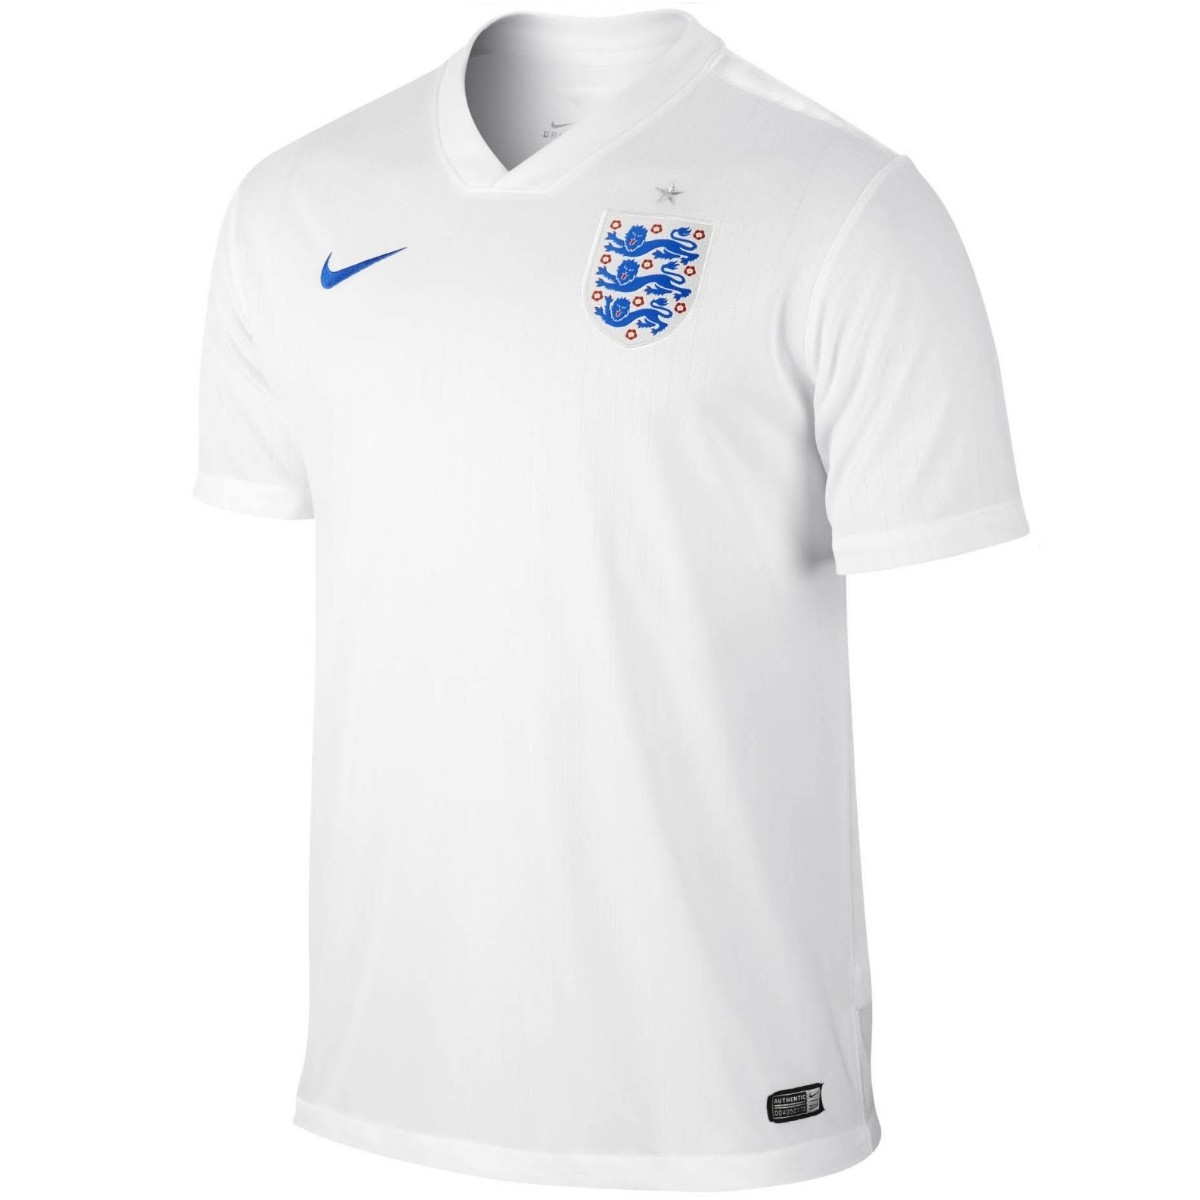 england soccer team jersey